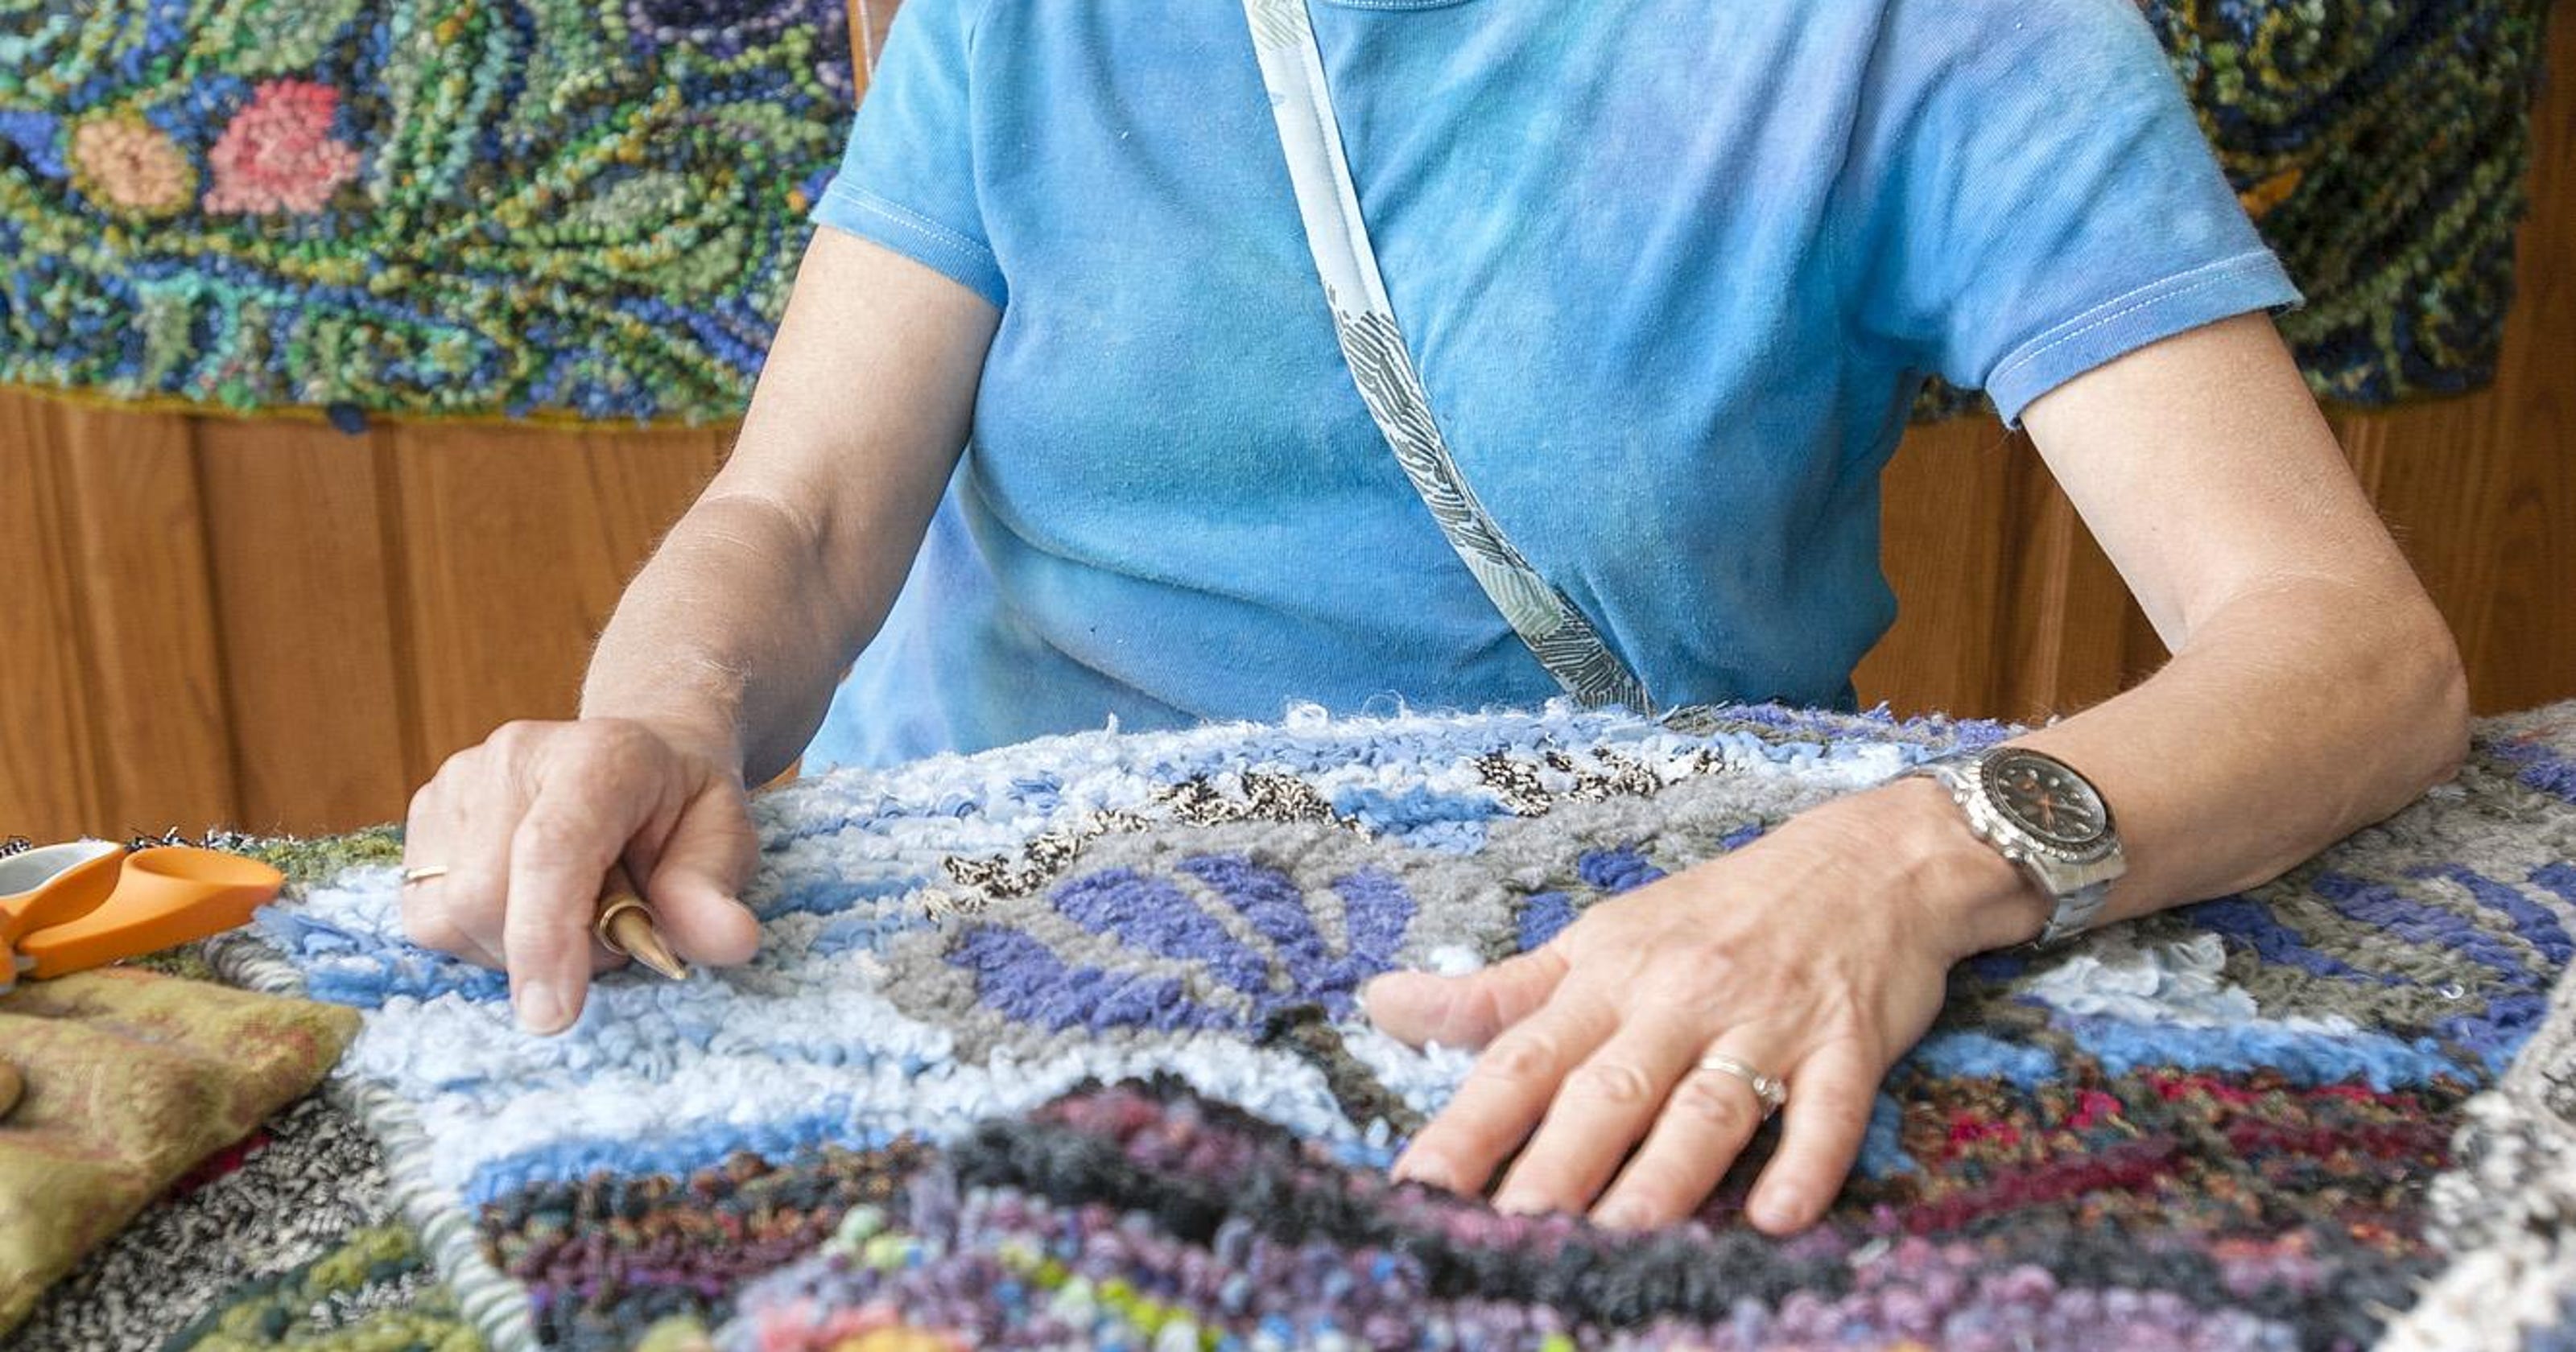 Handmade Crafting Milford Woman Hooked On Rug Making